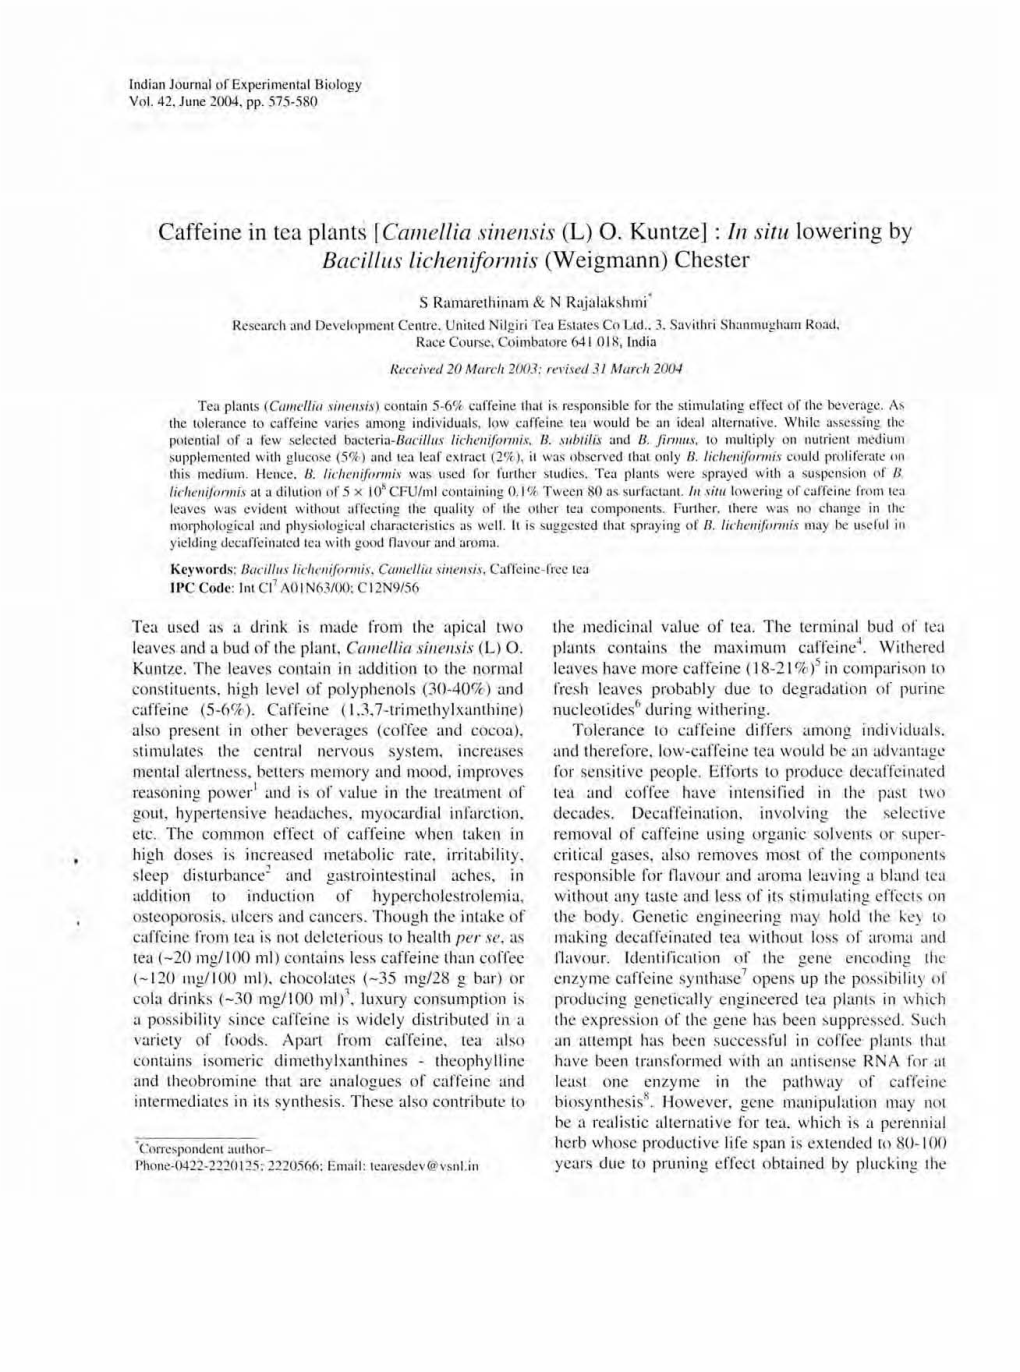 Caffeine in Tea Plants [Camellia Sinensis (L) O. Kuntze] : in Situ Lowering by Bacillus Li Chen~Fonnis (Weigmann) Chester